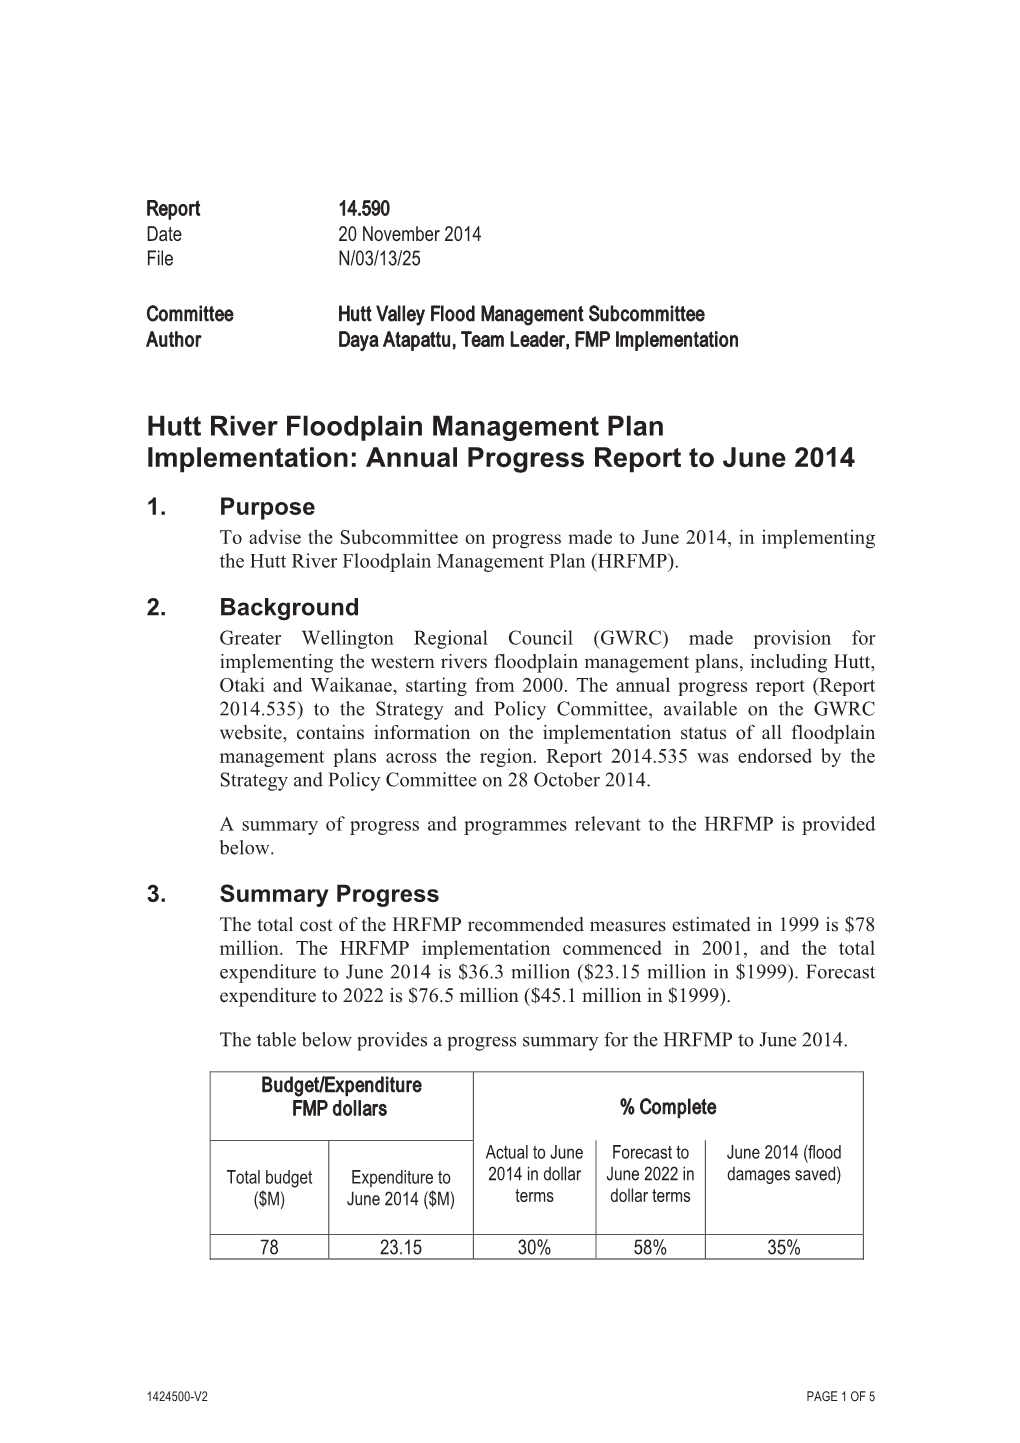 Hutt River Floodplain Management Plan Implementation: Annual Progress Report to June 2014 1